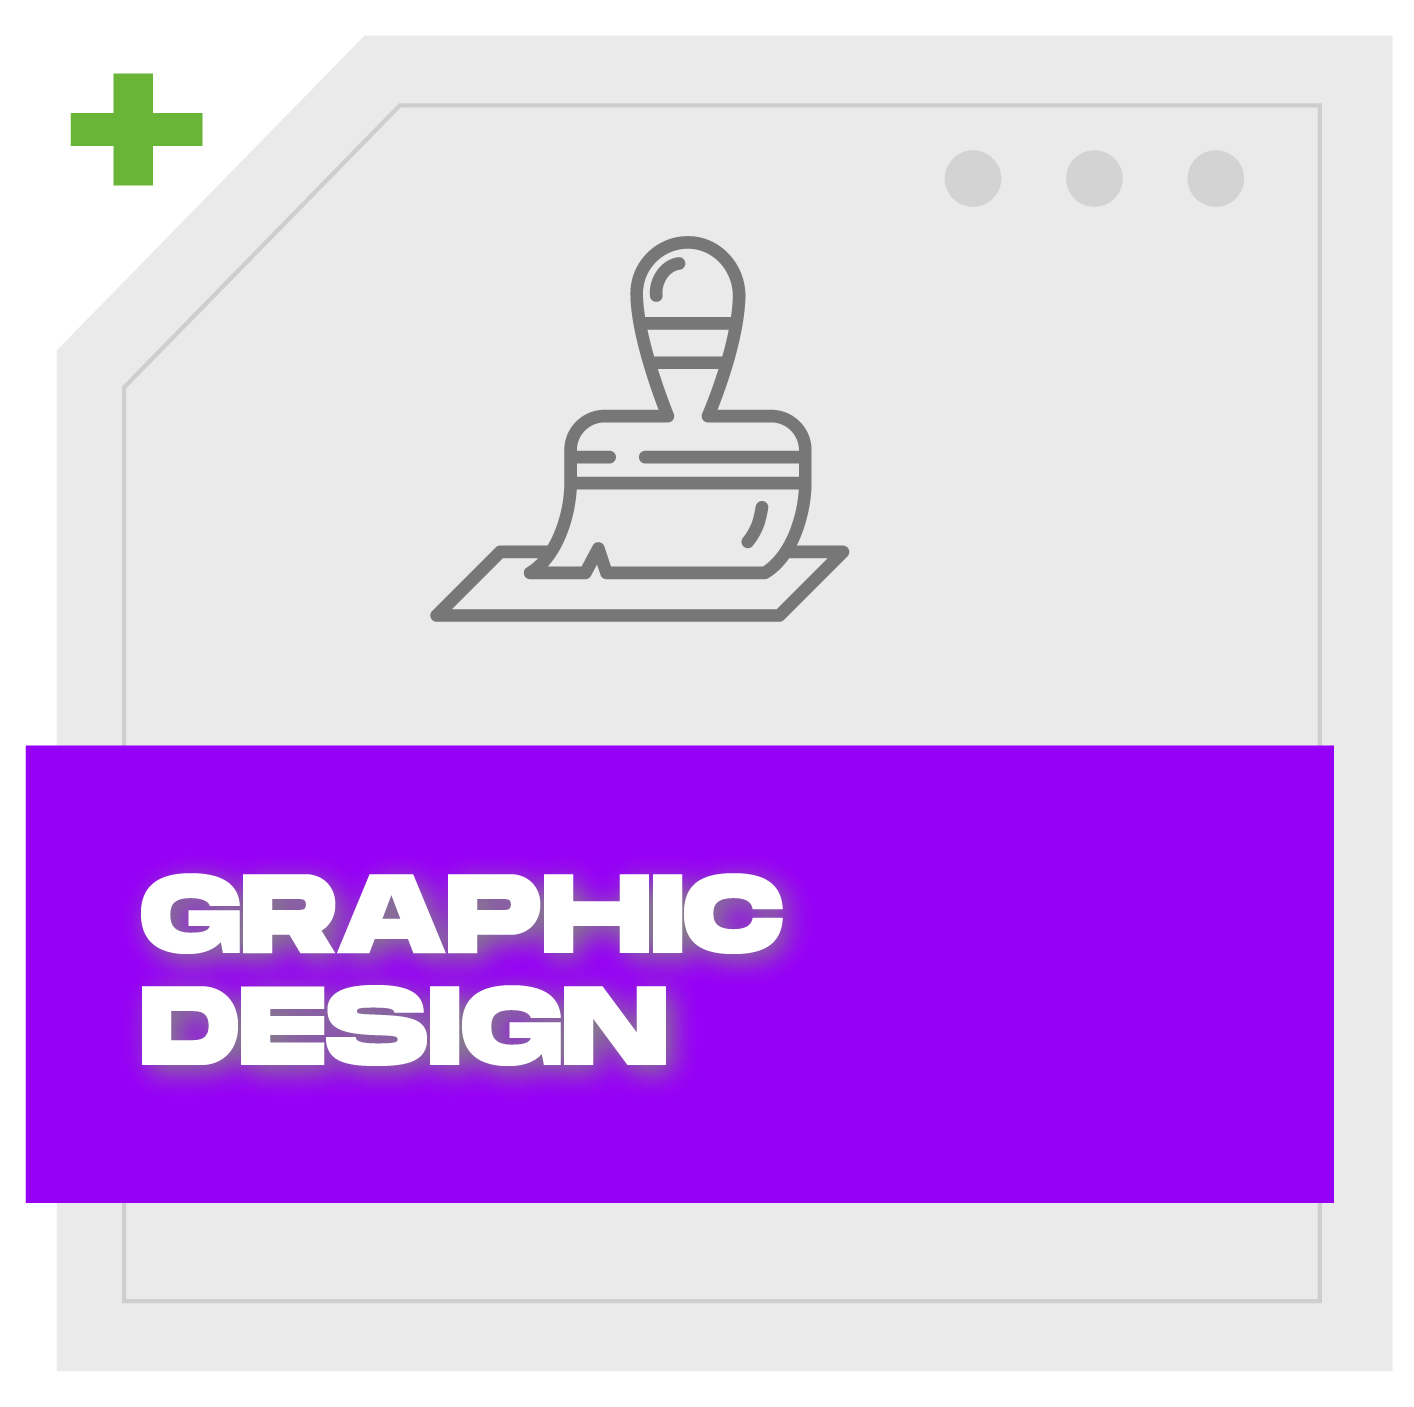 Graphic Design Services - Digital Marketing Services